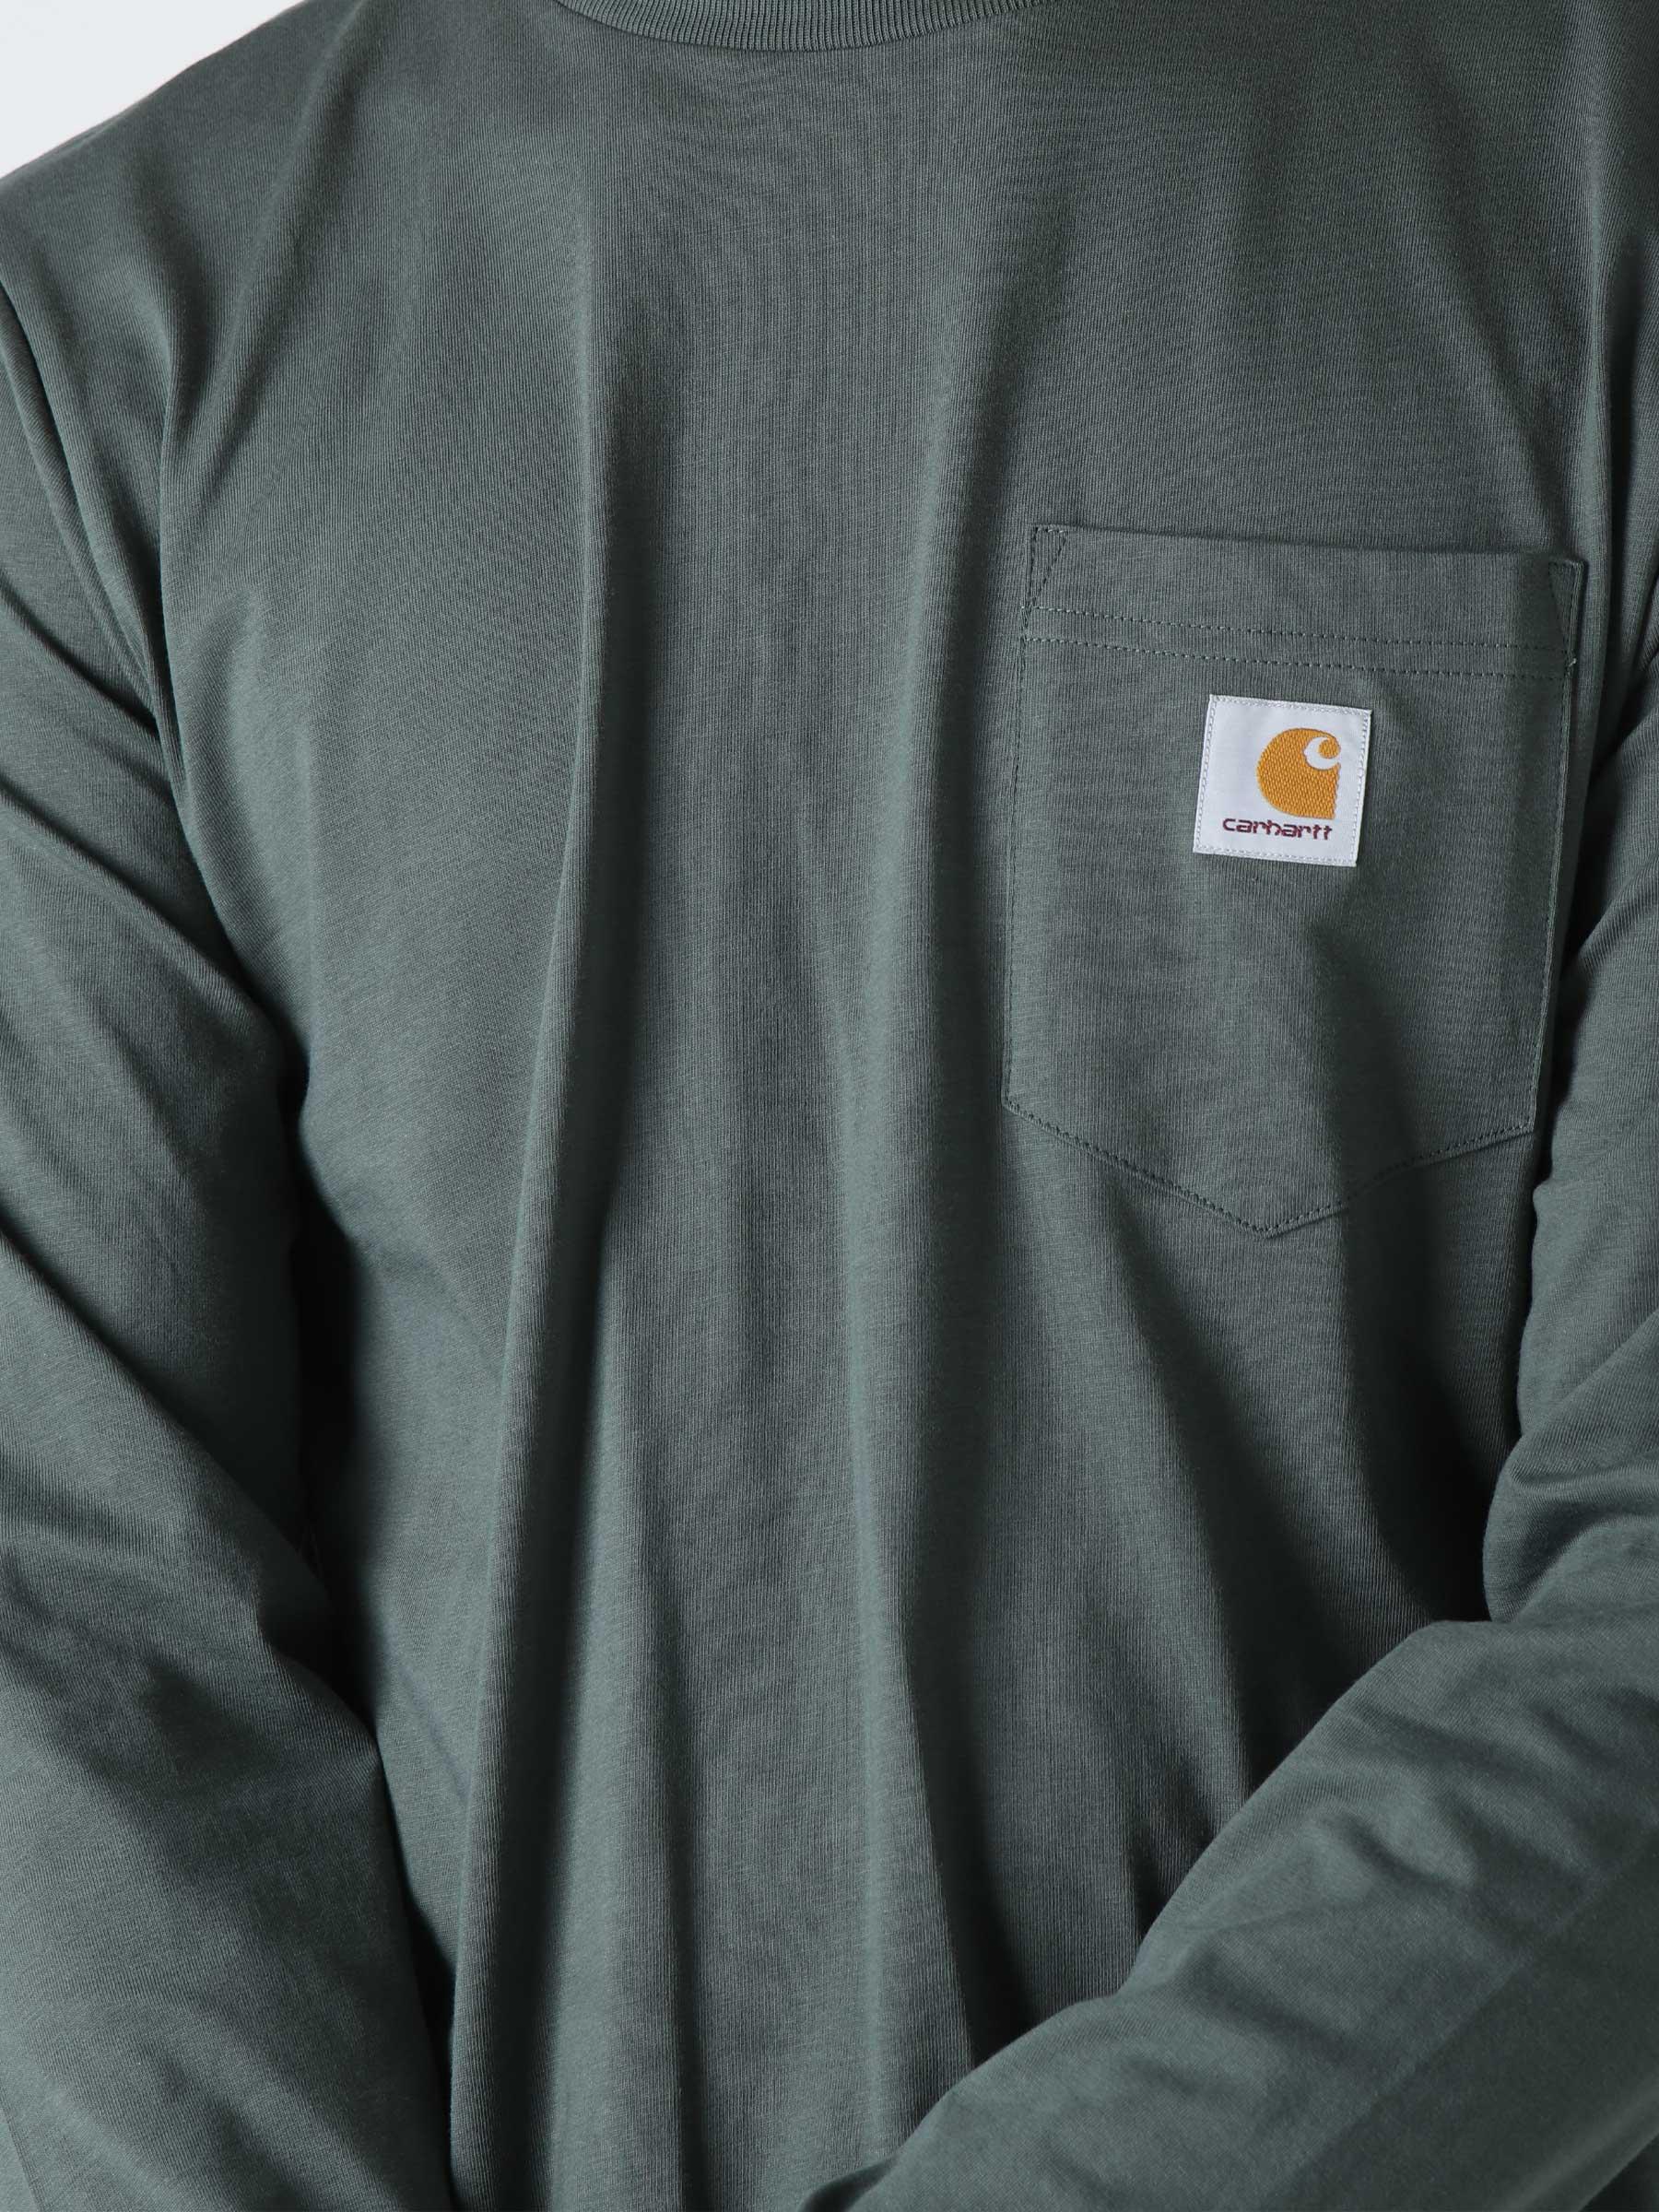 Longsleeve Pocket T-Shirt Hemlock Green I022094-0NVXX